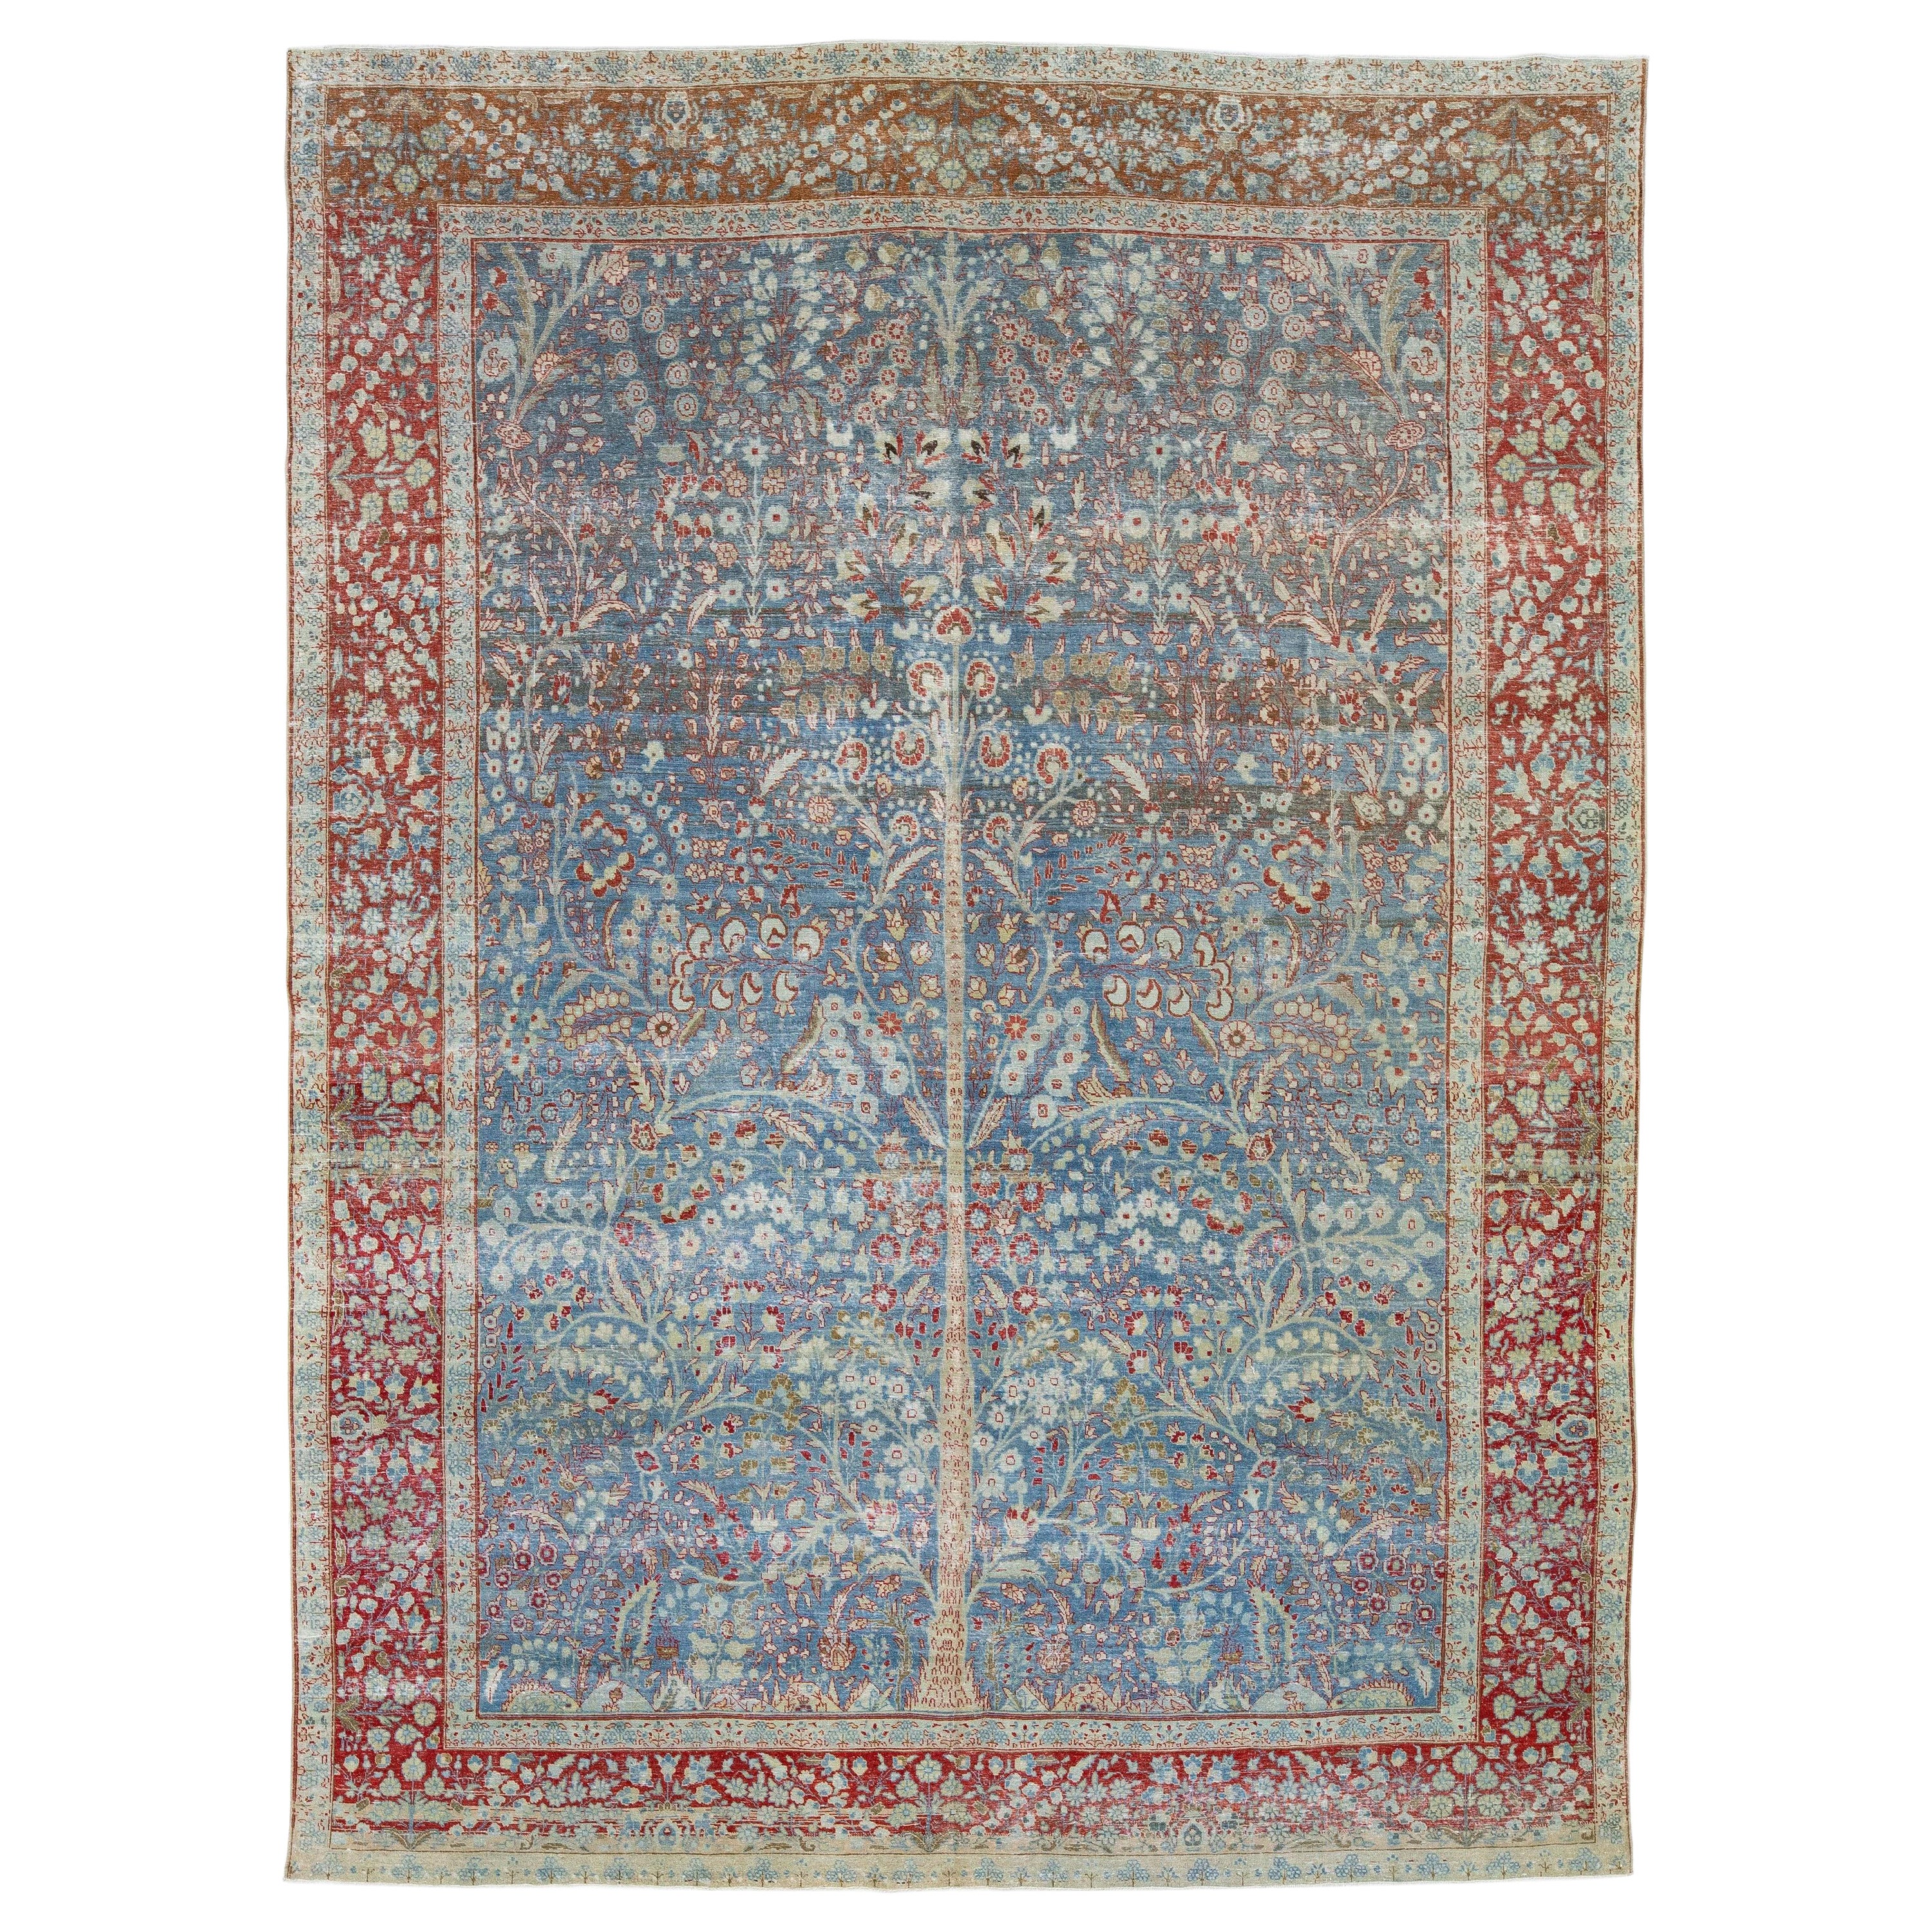 Antique Persian Tabriz Handmade Blue Wool Rug with Shah Abbasi Design